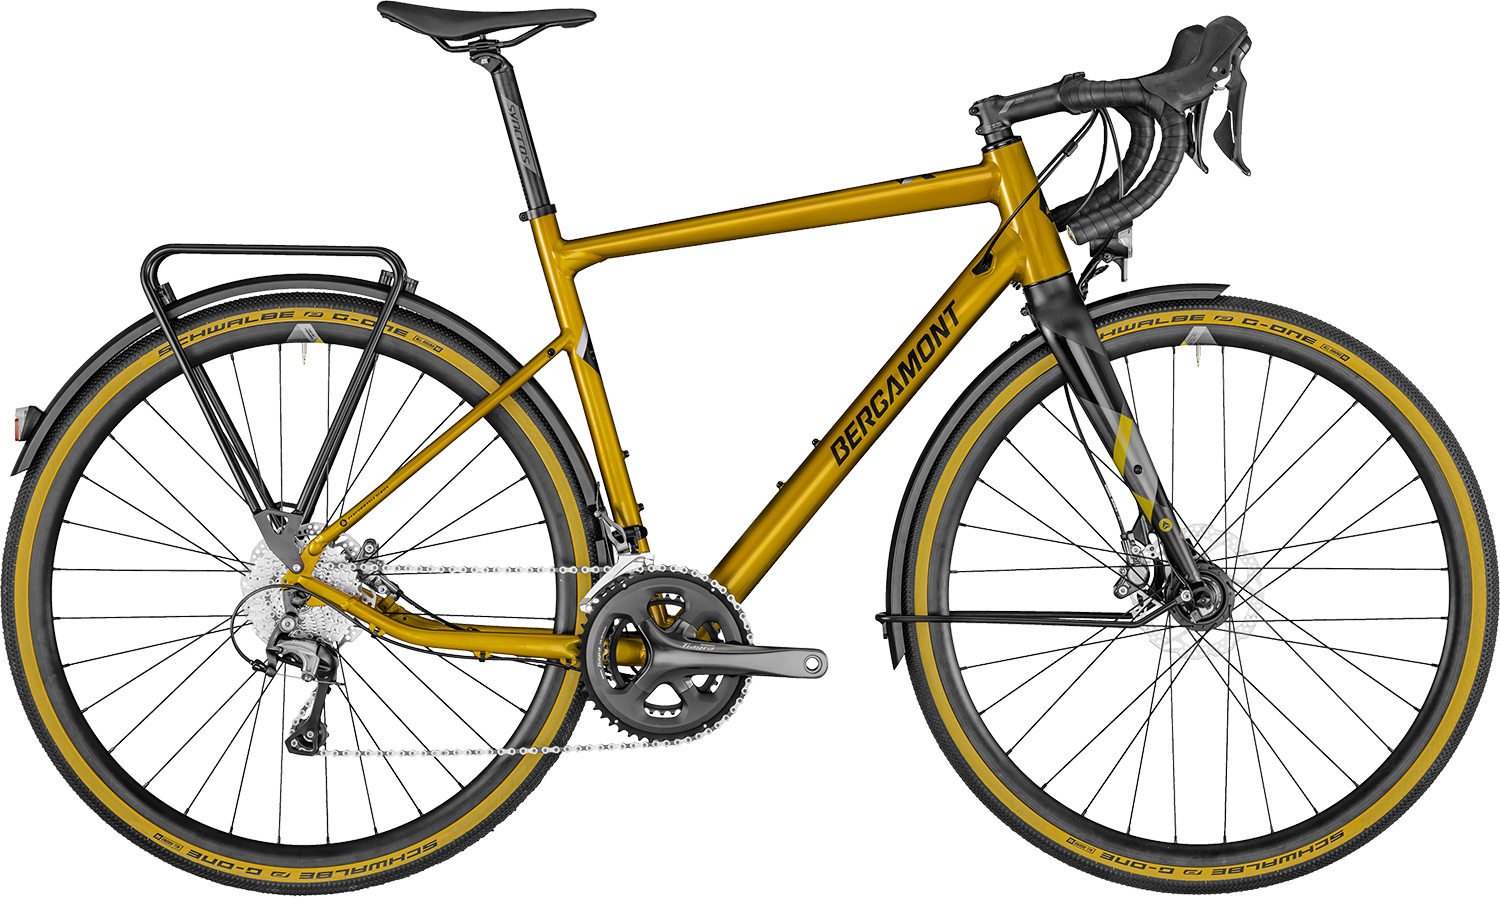 Bergamont Grandurance RD 5 2021 - Orange